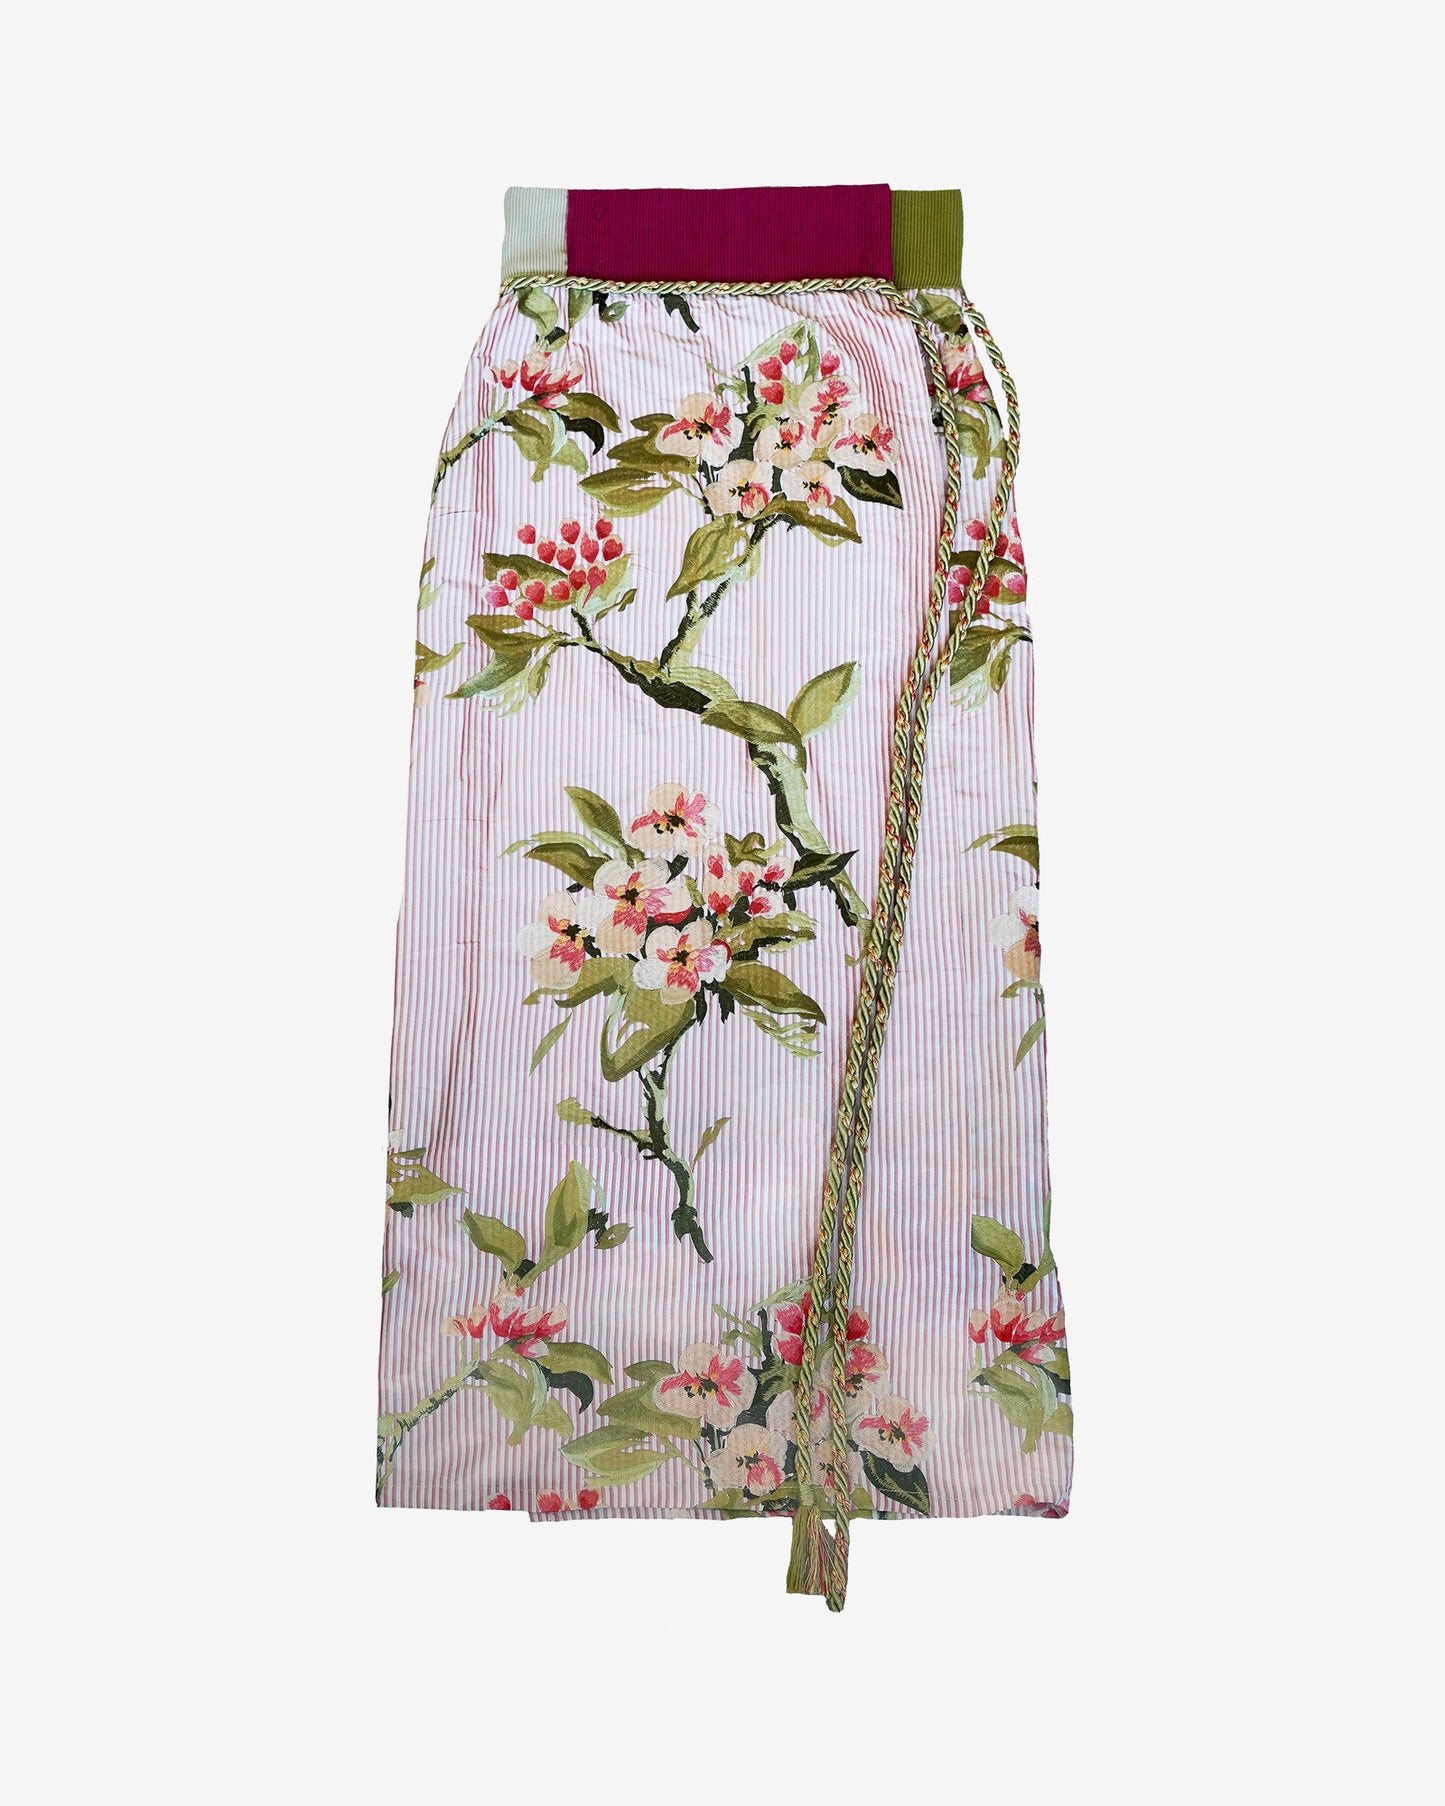 Giardino Segreto Set (Top-Skirt-Bag)